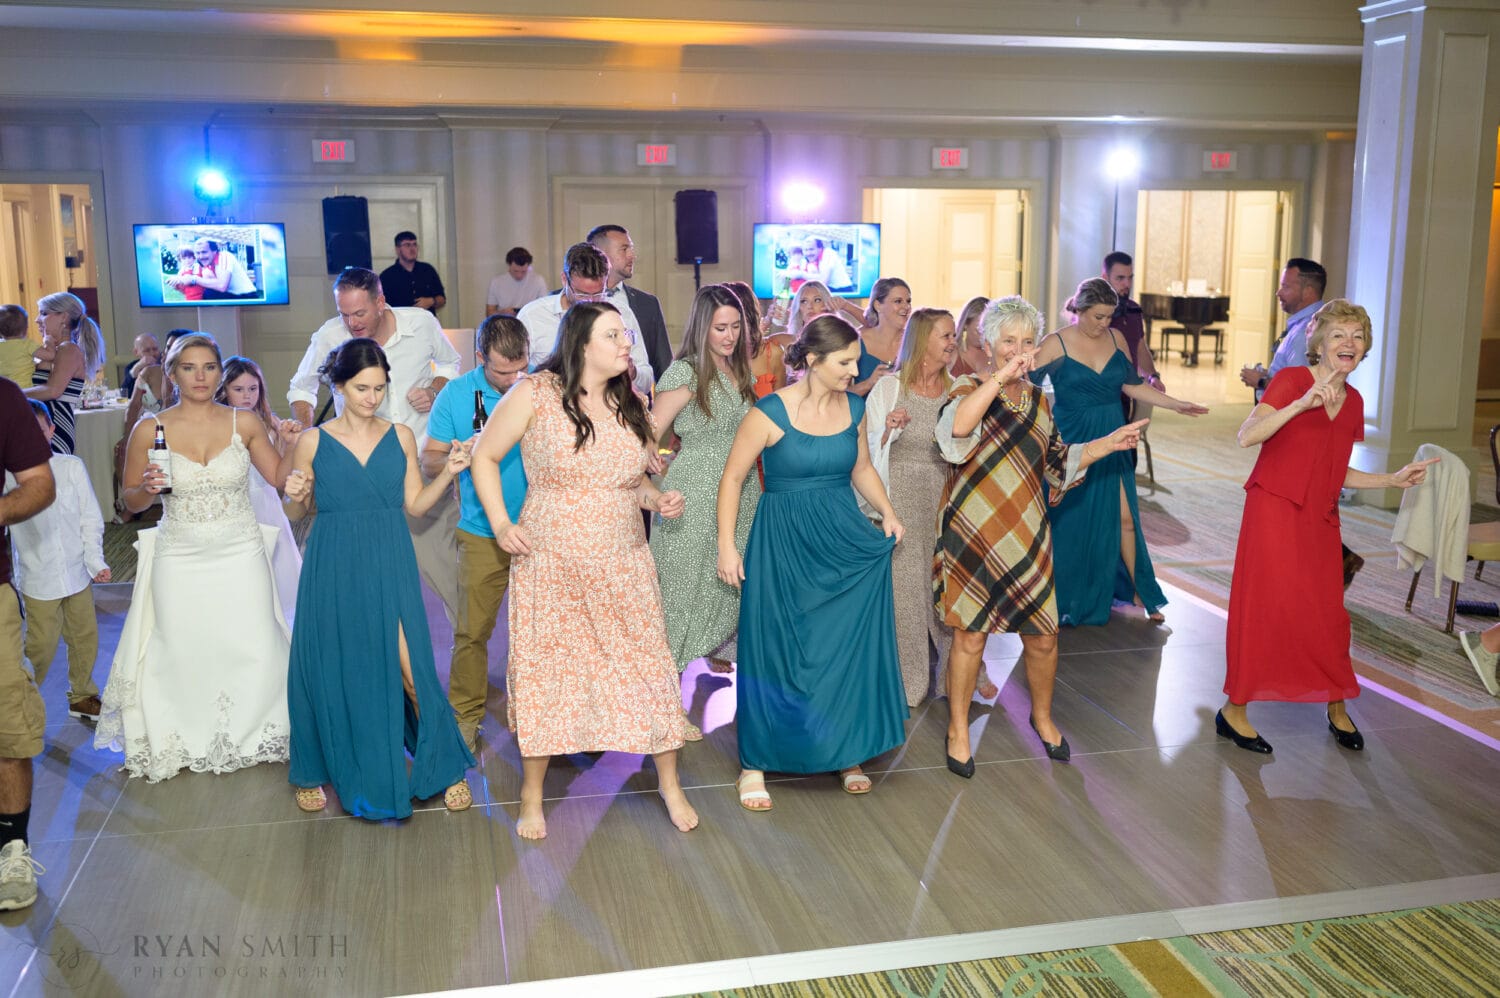 Fun dancing during the reception - Dunes Golf & Beach Club